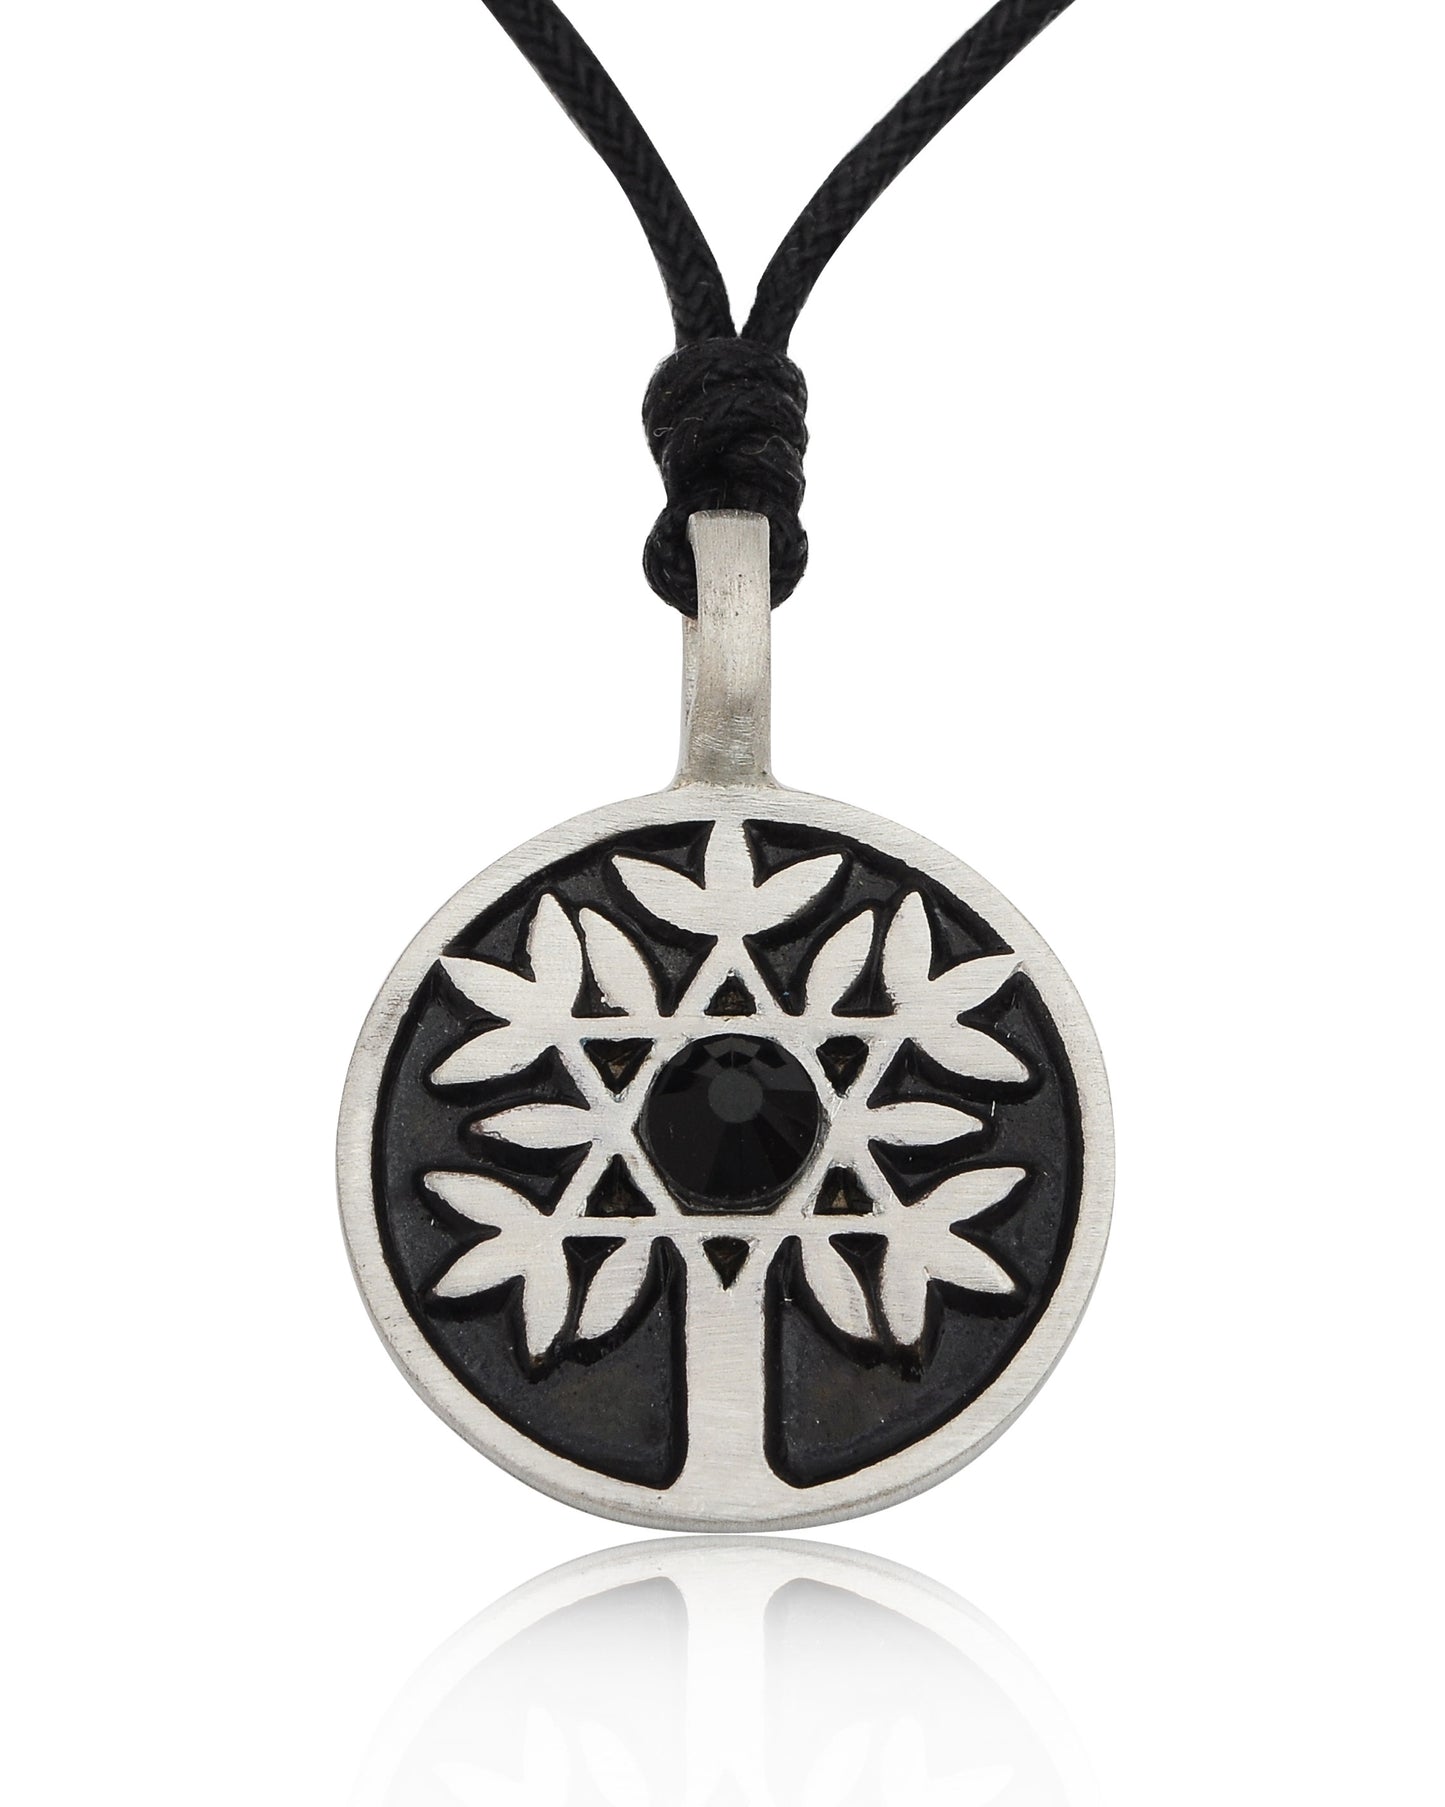 New David Star Peace Jewish Tree Silver Pewter Charm Necklace Pendant Jewelry